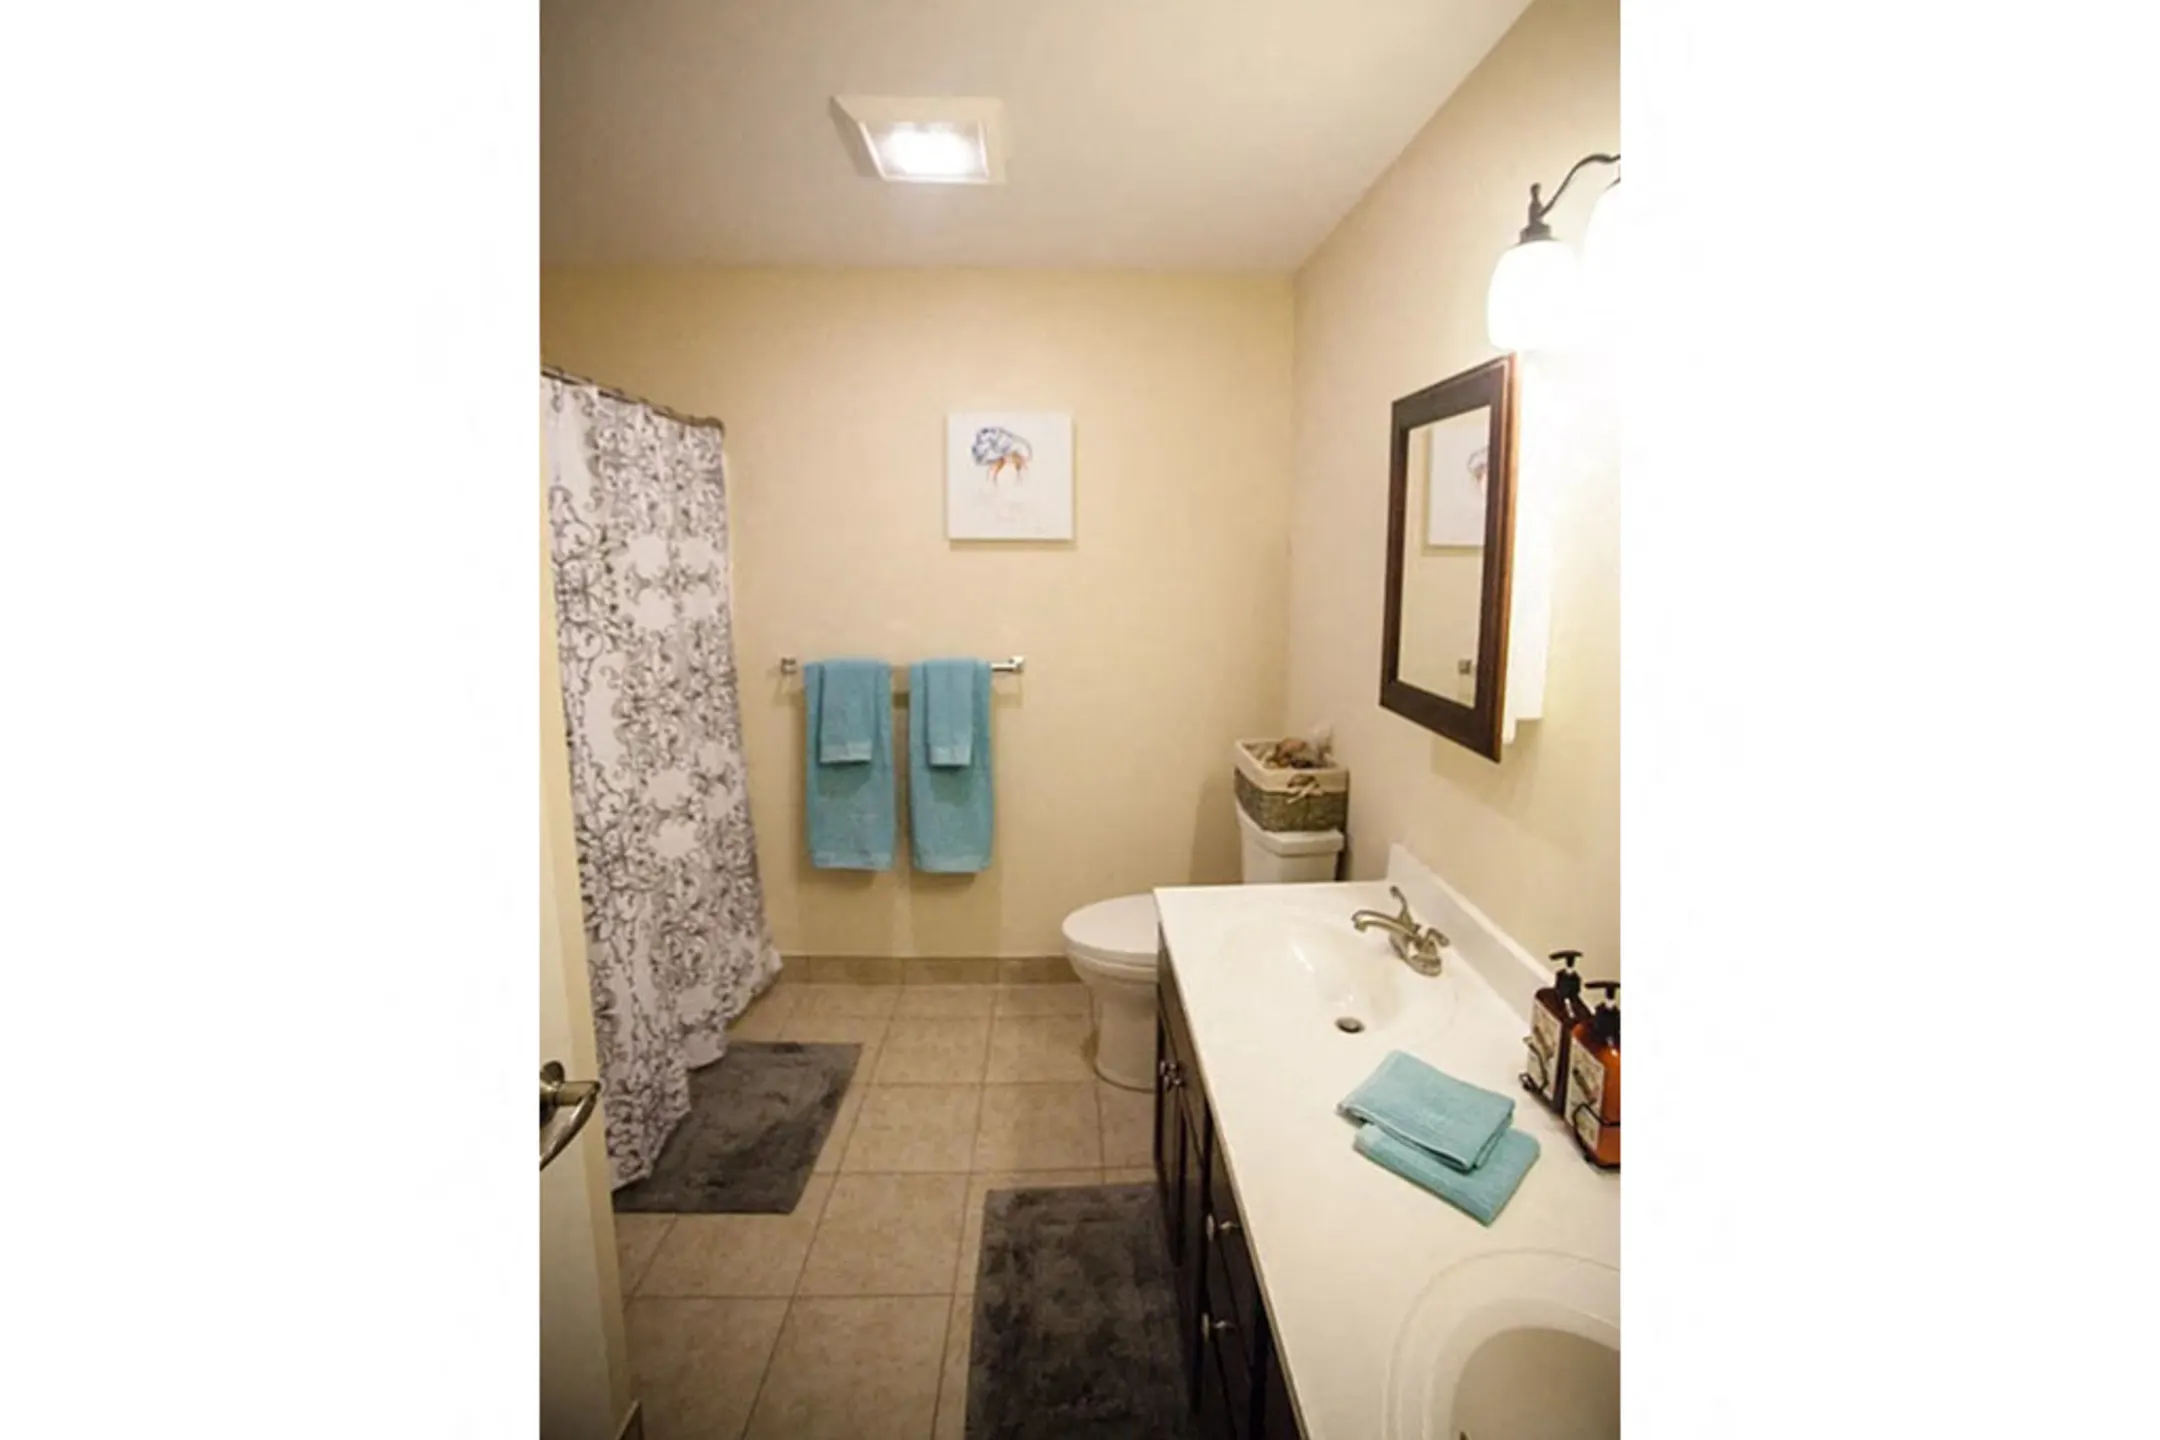 Bathroom - The Tilley Lofts - Watervliet, NY